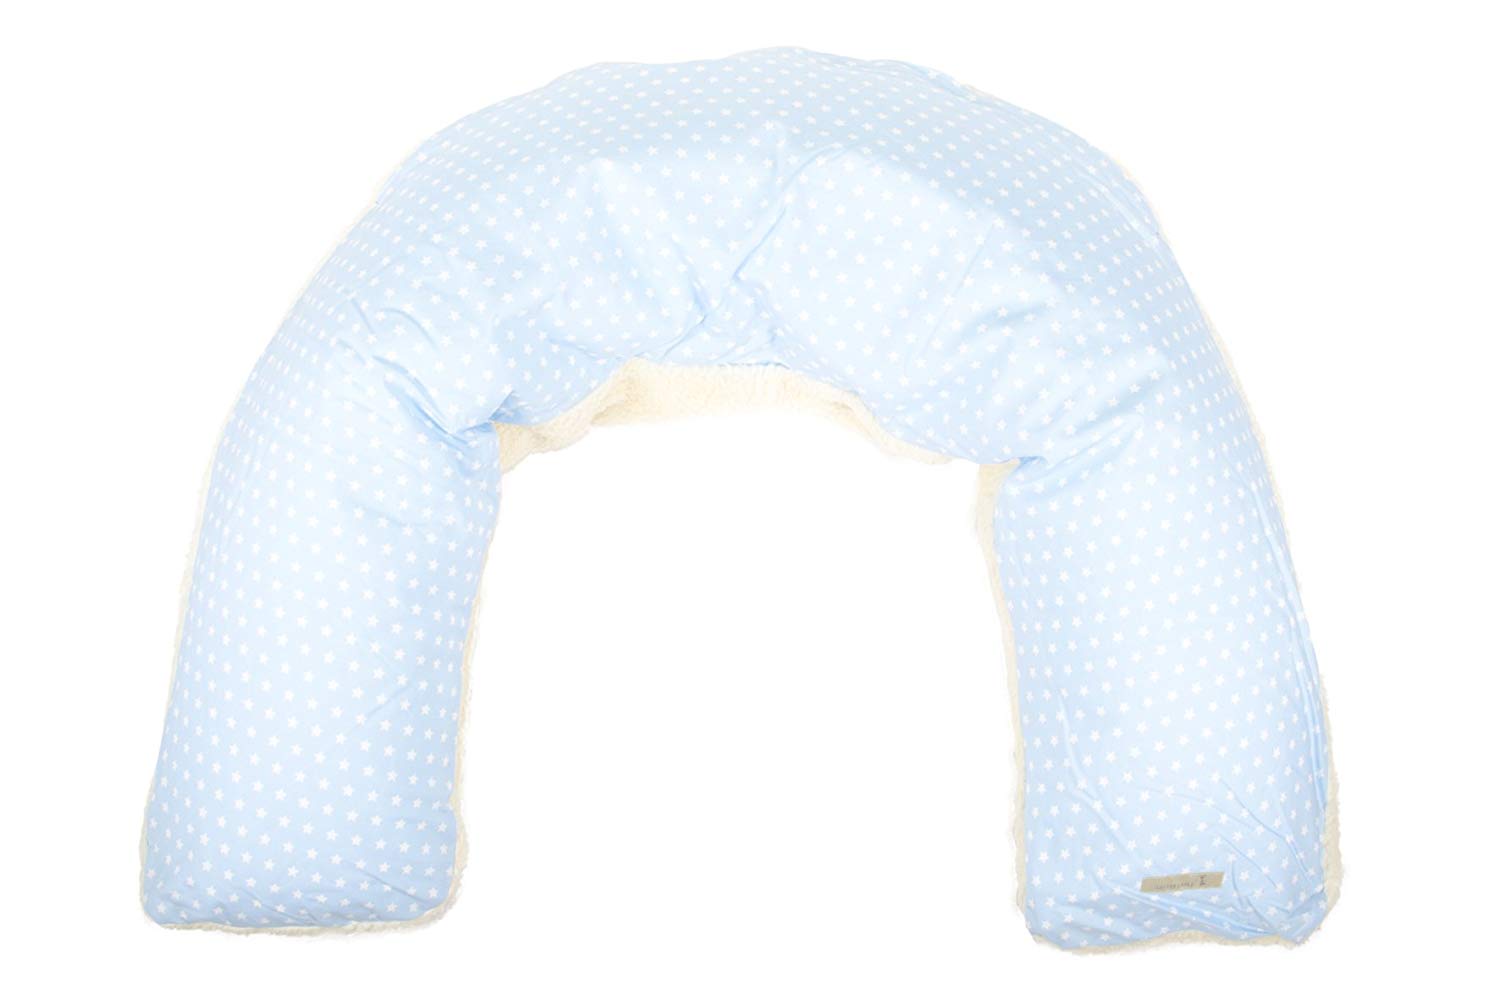 Lottas Lable 15000 – 53 Nursing Pillow Stars Light Blue